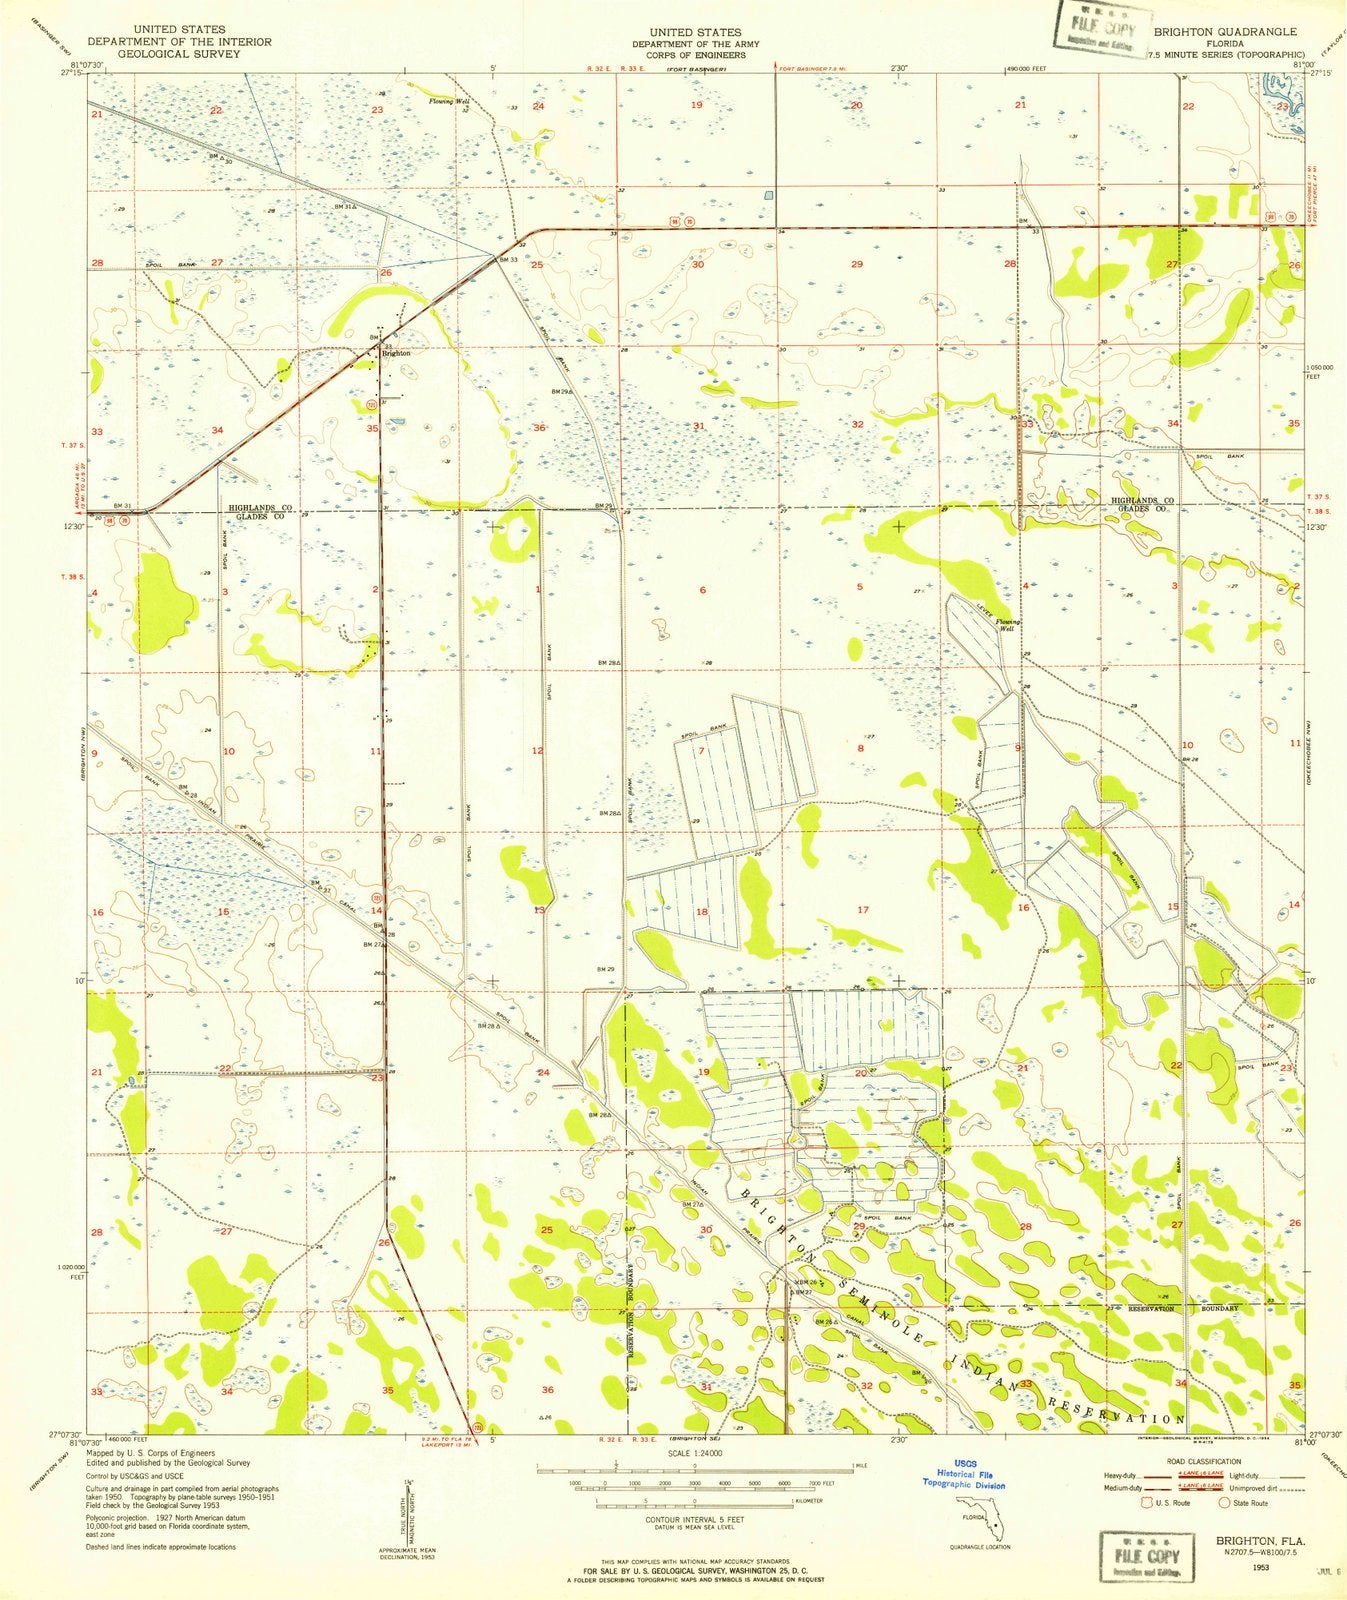 1953 Brighton, FL - Florida - USGS Topographic Map v4